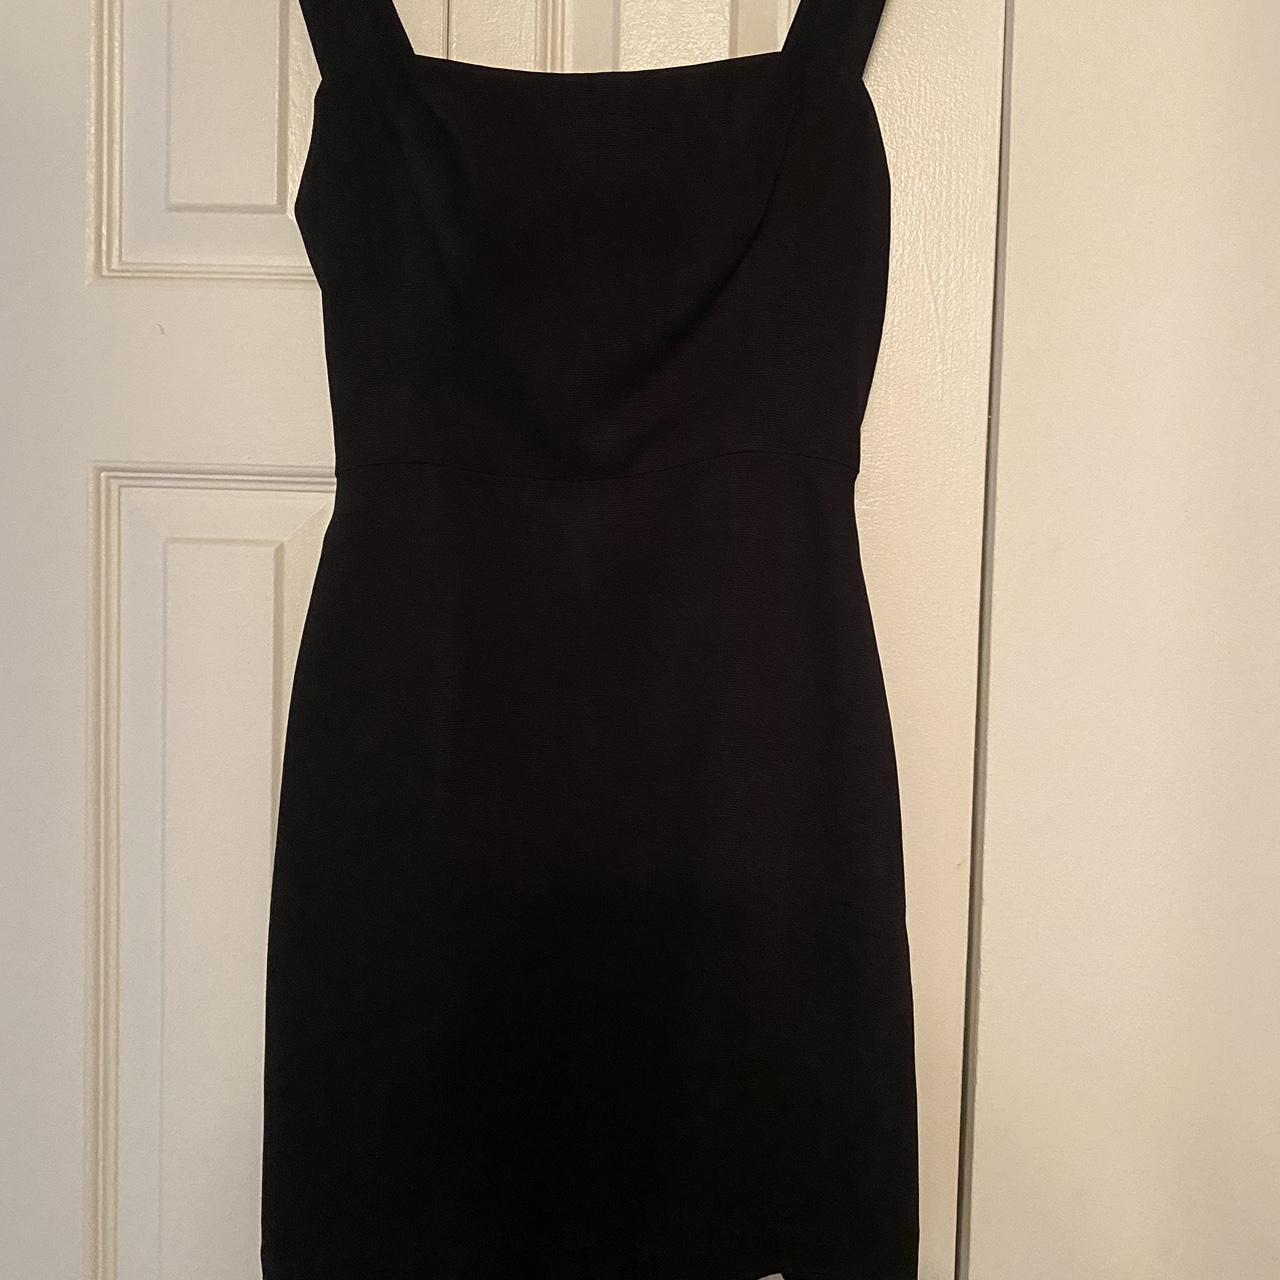 Aritzia aperature dress. Black. Only worn once. Size... - Depop